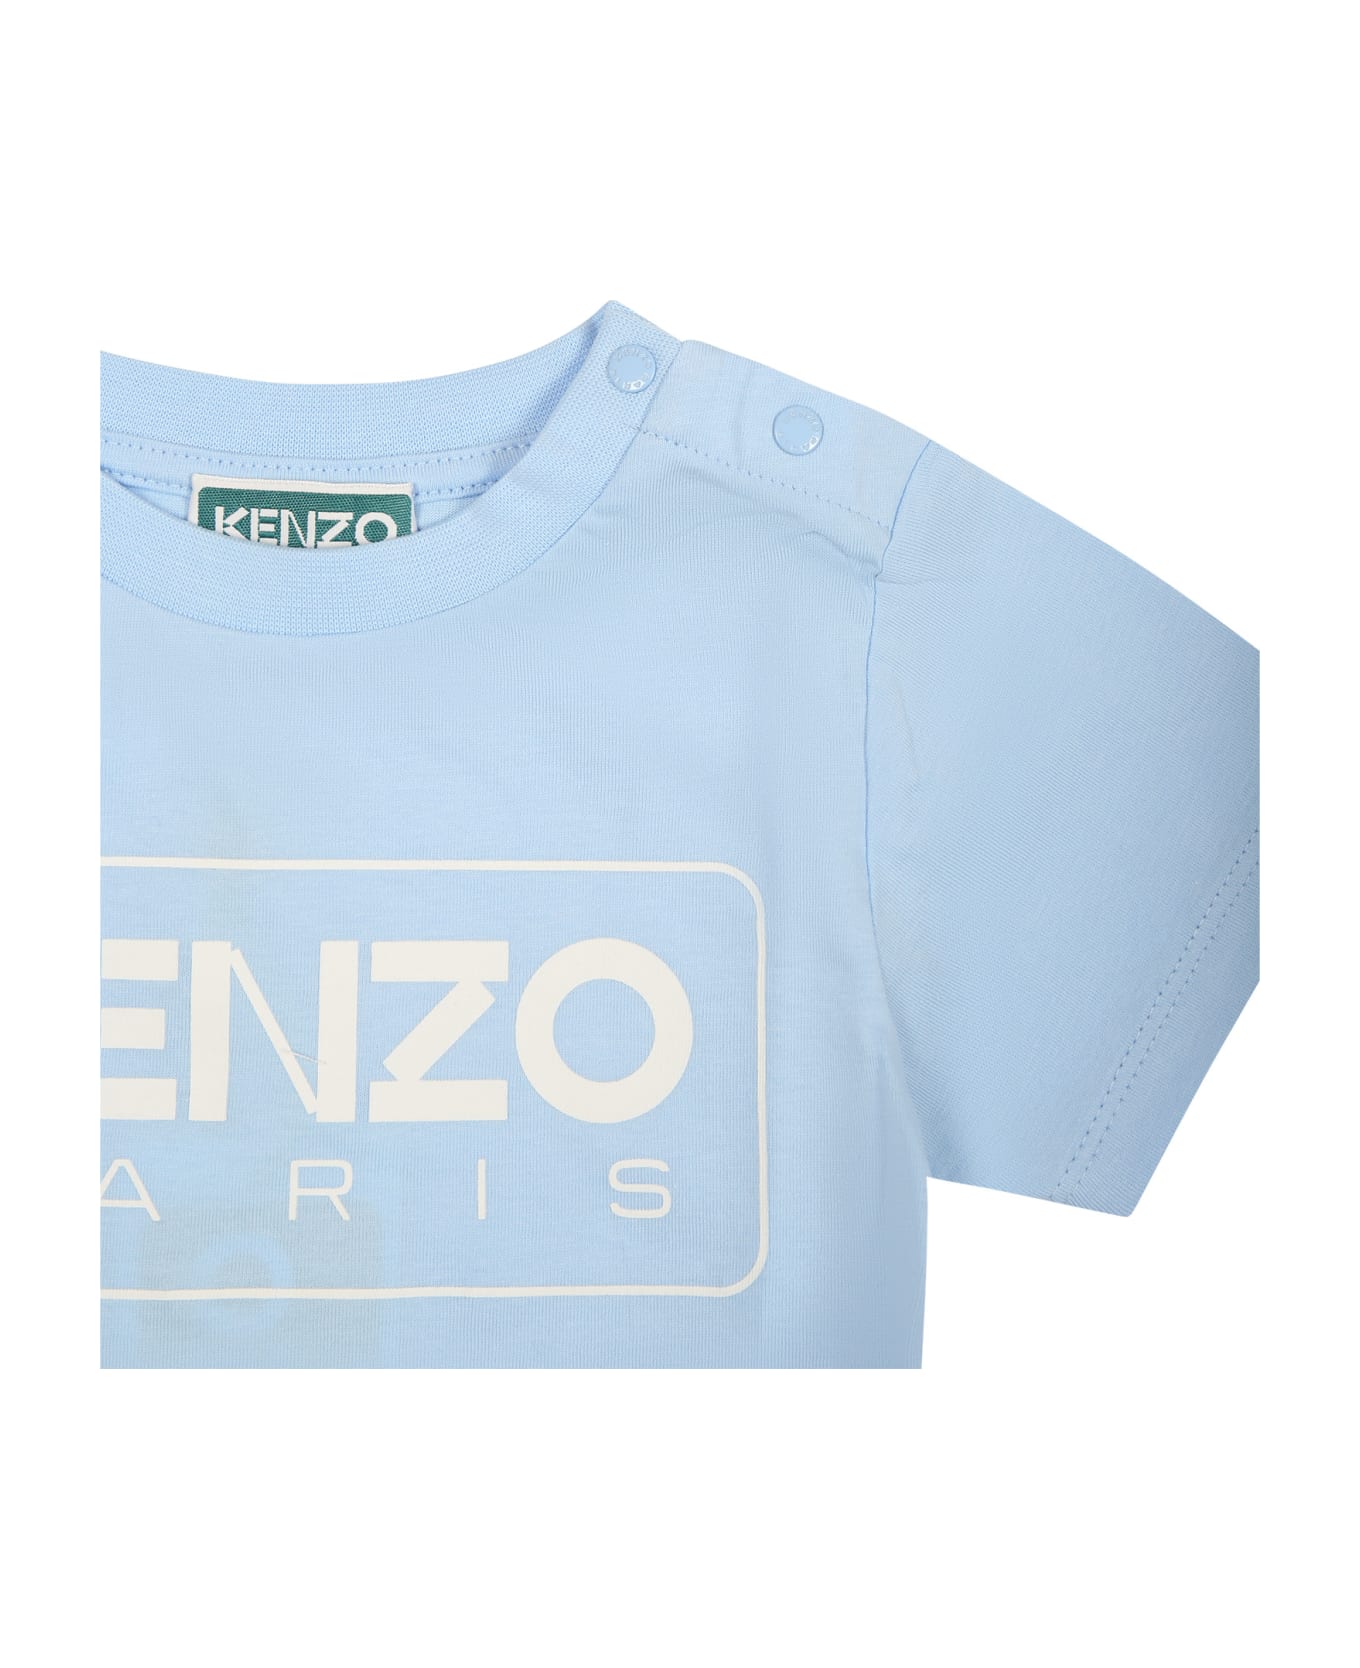 Kenzo Kids Light Blue T-shirt For Baby Boy With Logo - Light Blue